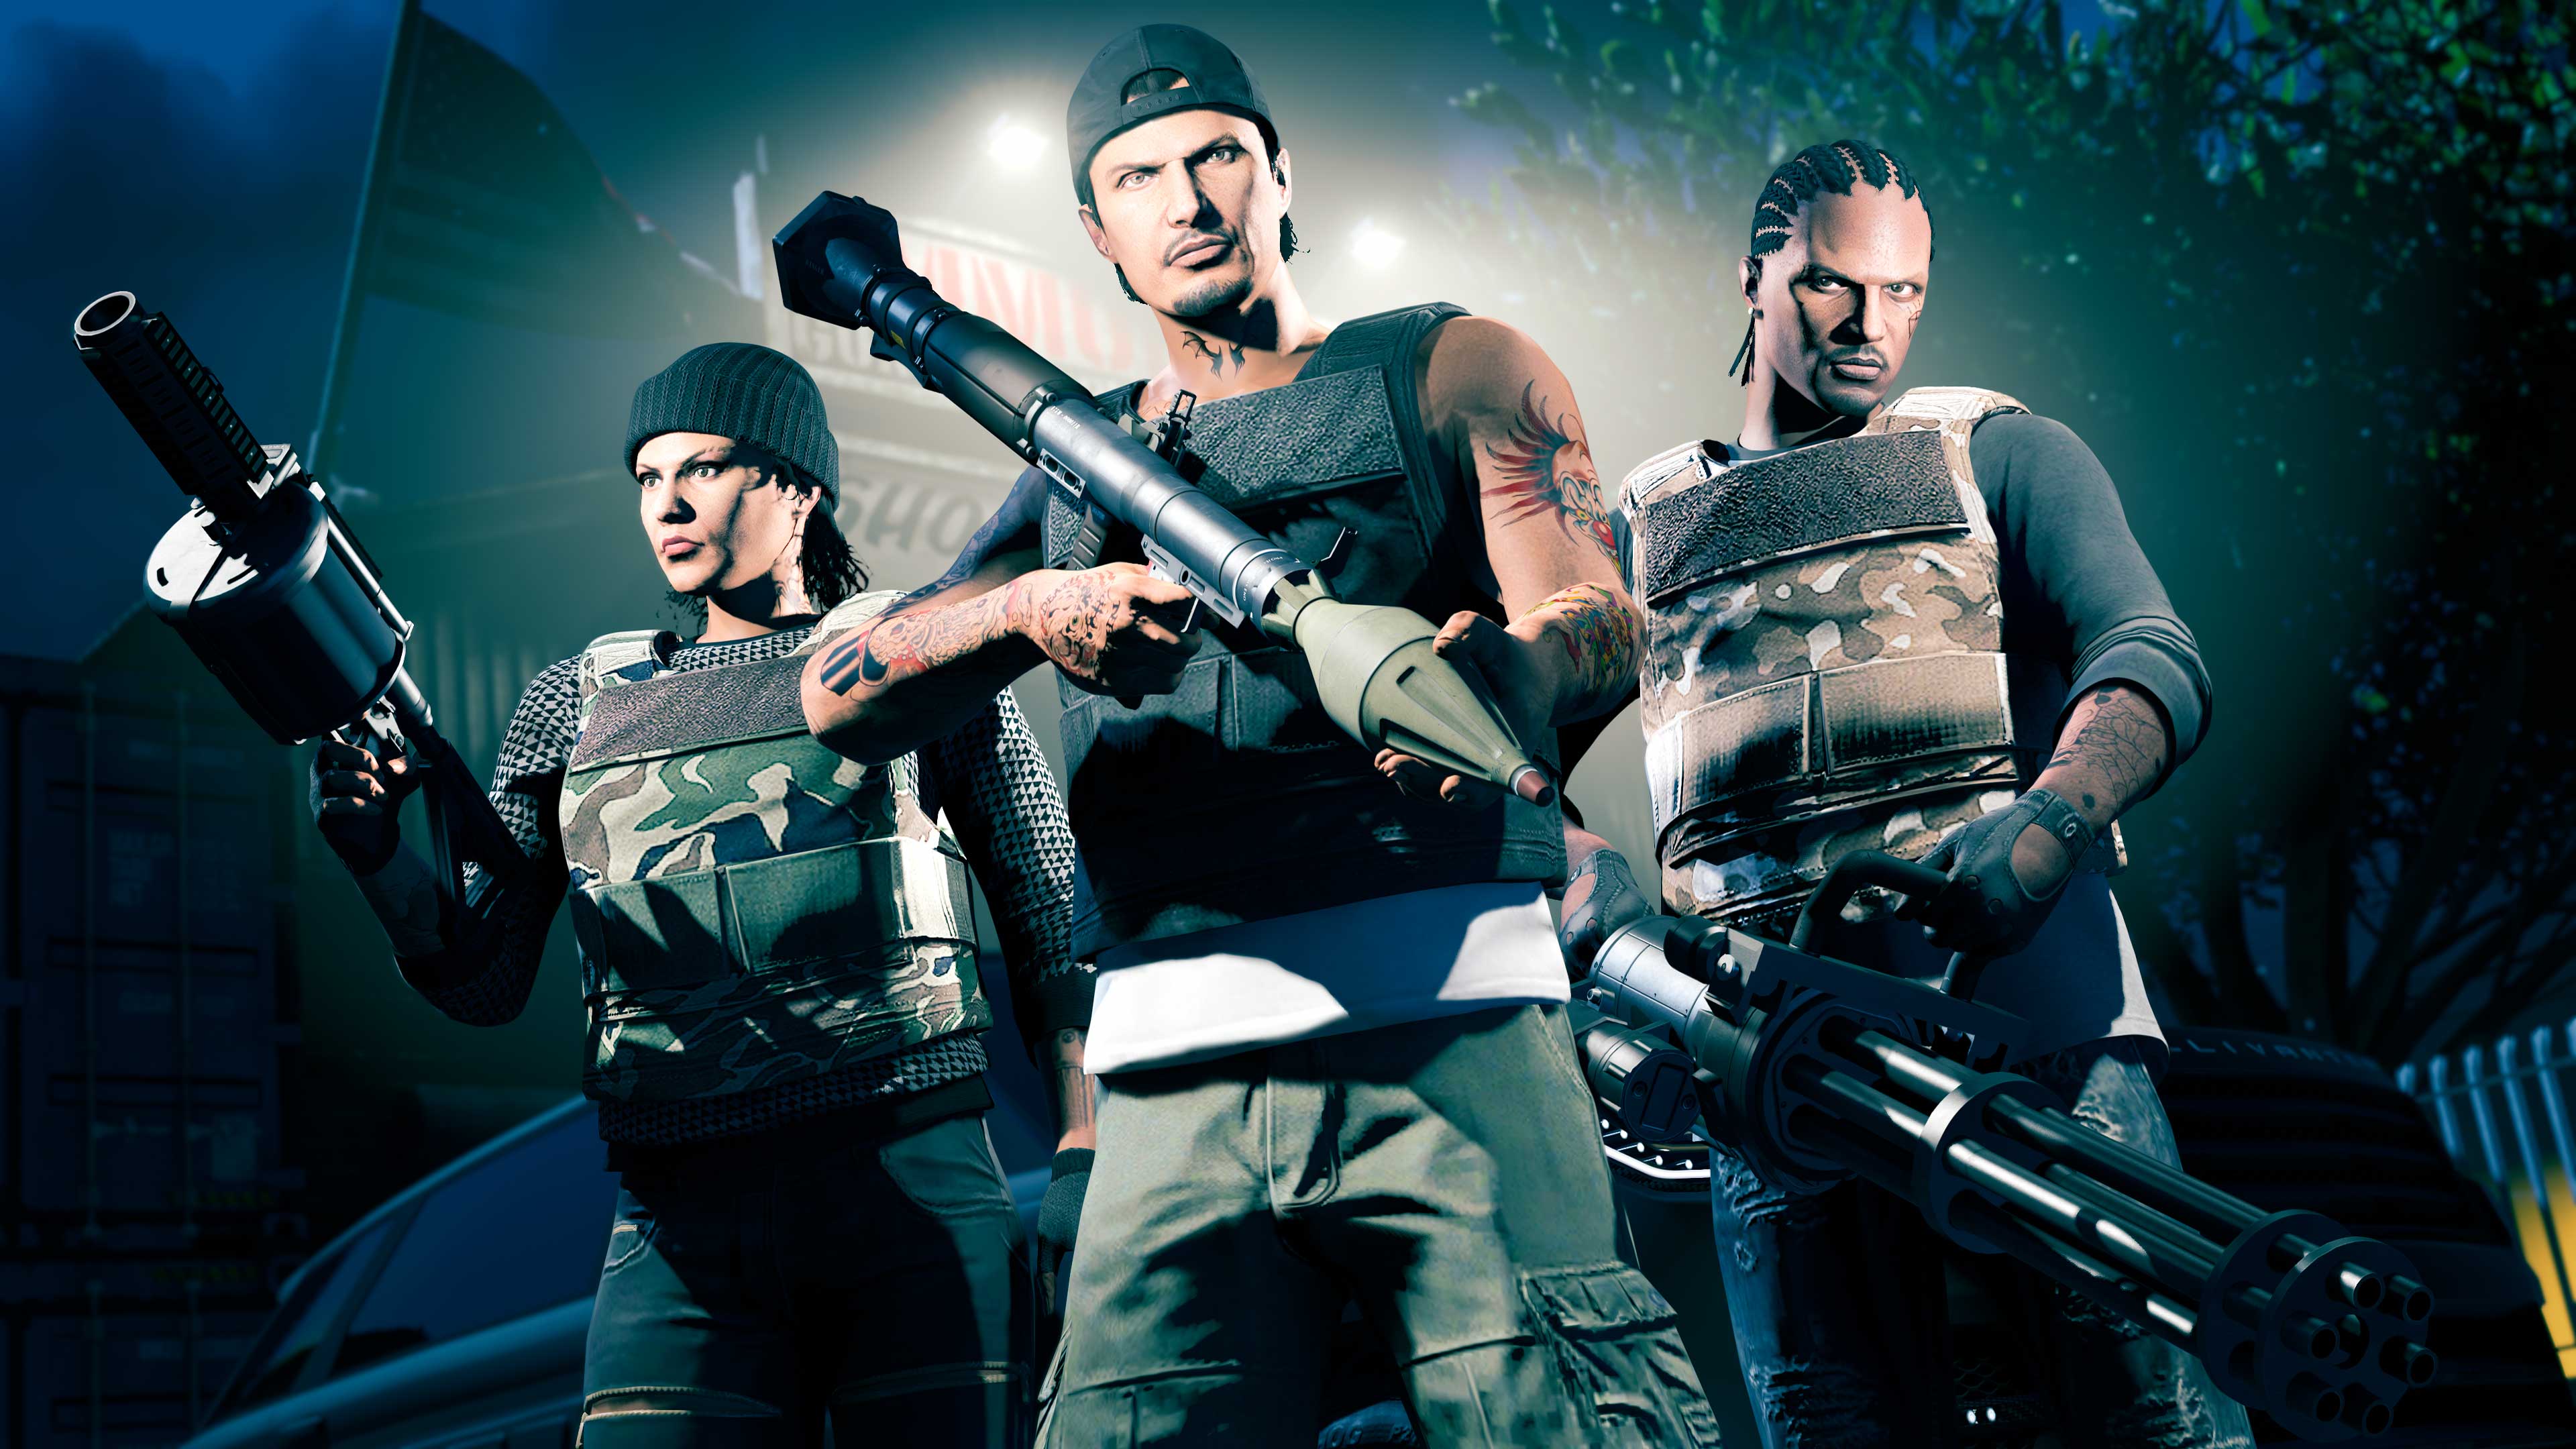 GTA 5 - Rockstar Confirm Niko Bellic was taken out! 